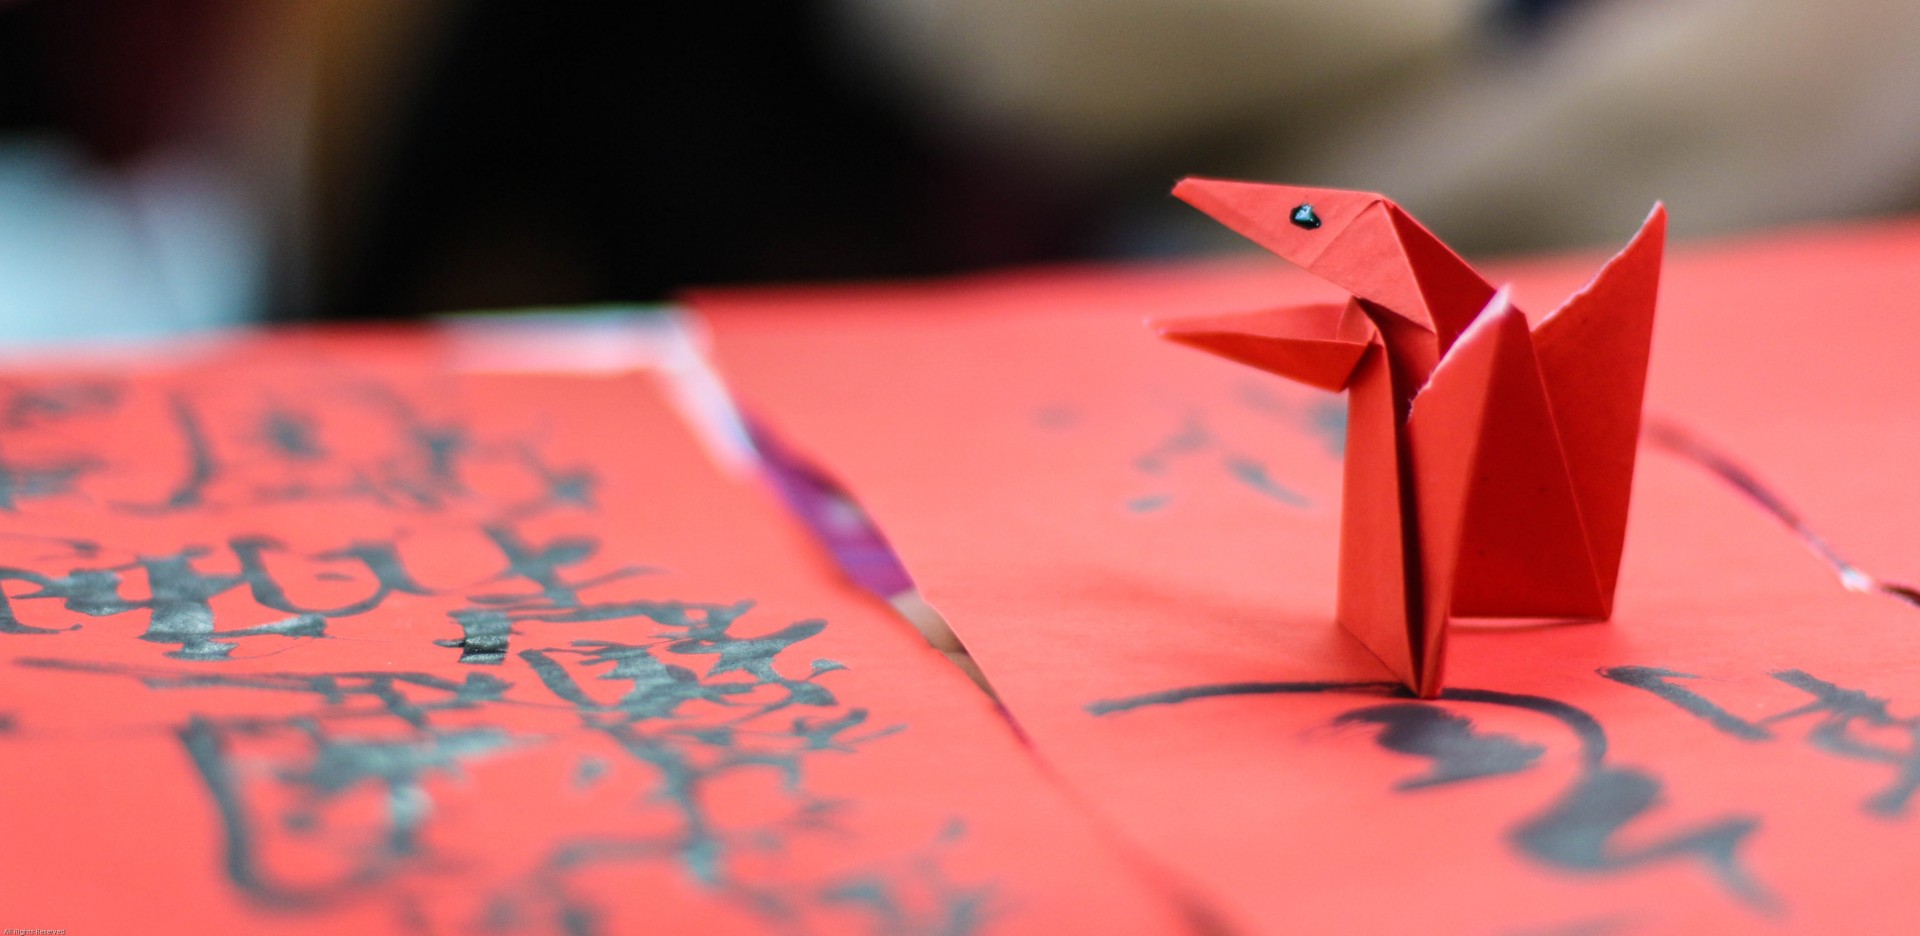 Bird Origami